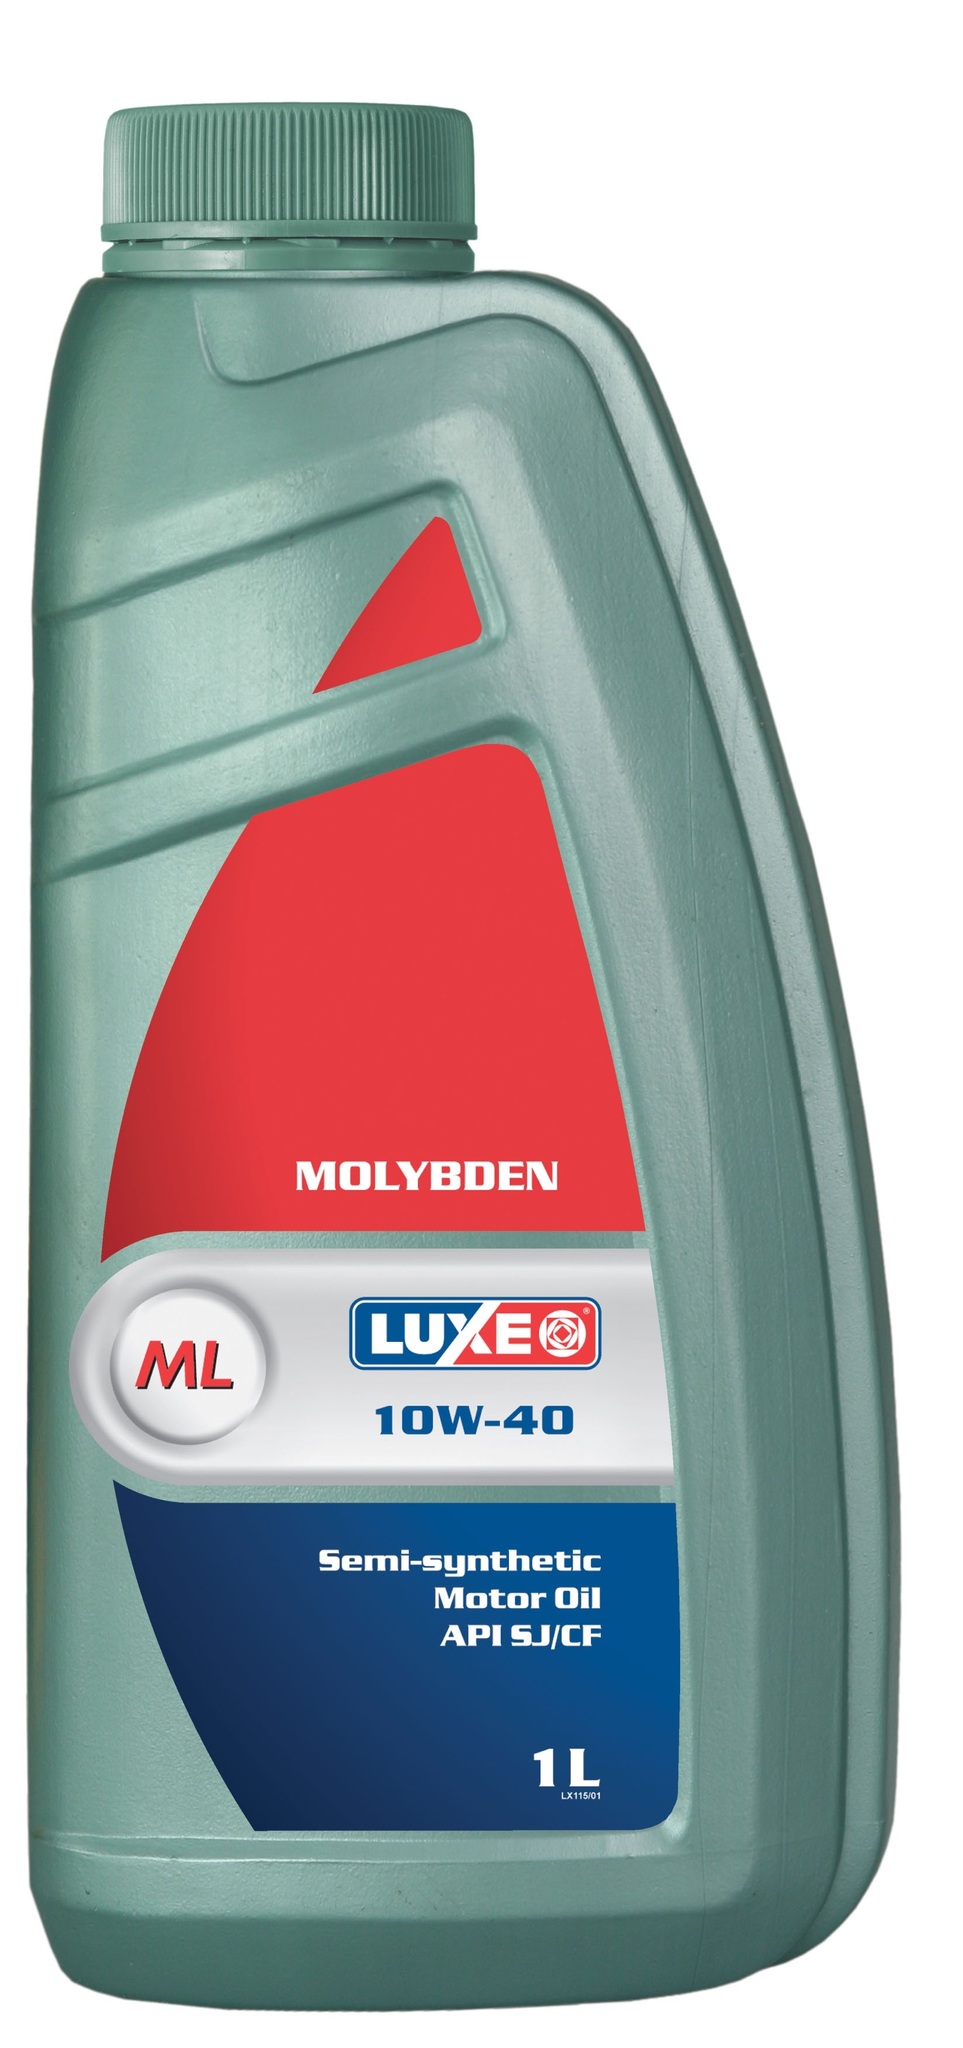 Luxe Molybden 10W-40 - Универсальное моторное масло (1л)